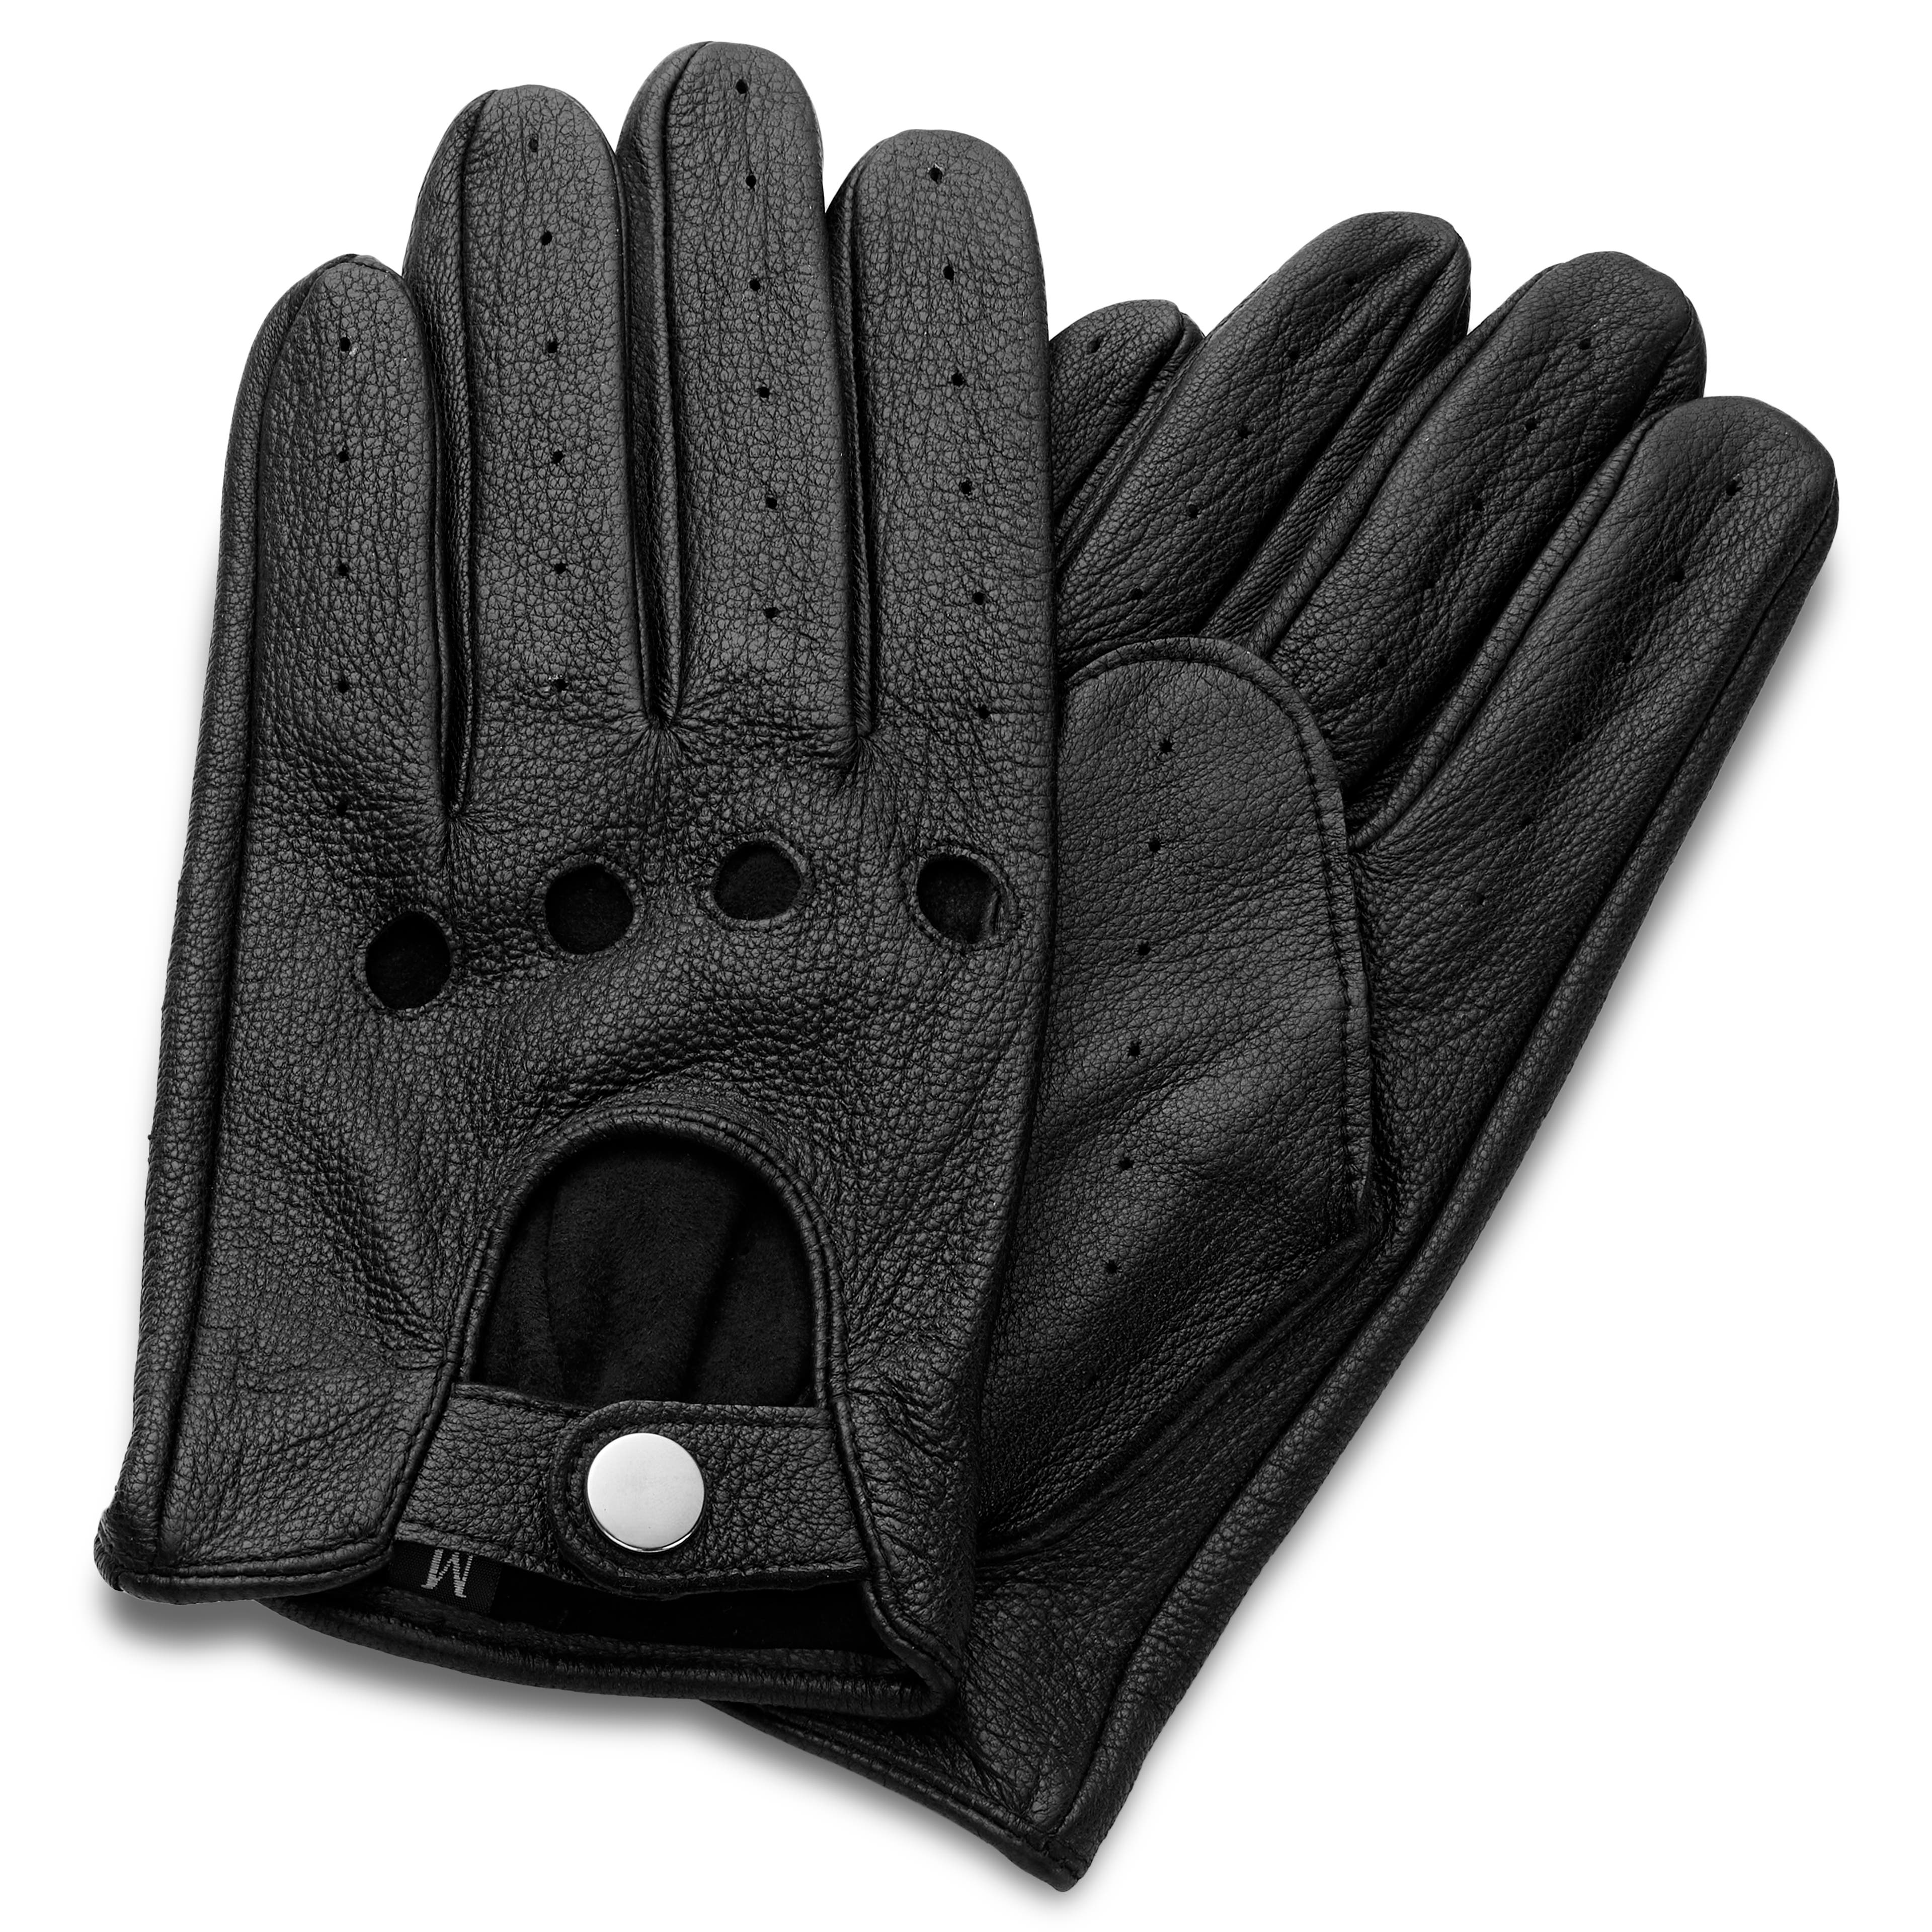 Black Rugged Sheepskin Leather Driving Gloves